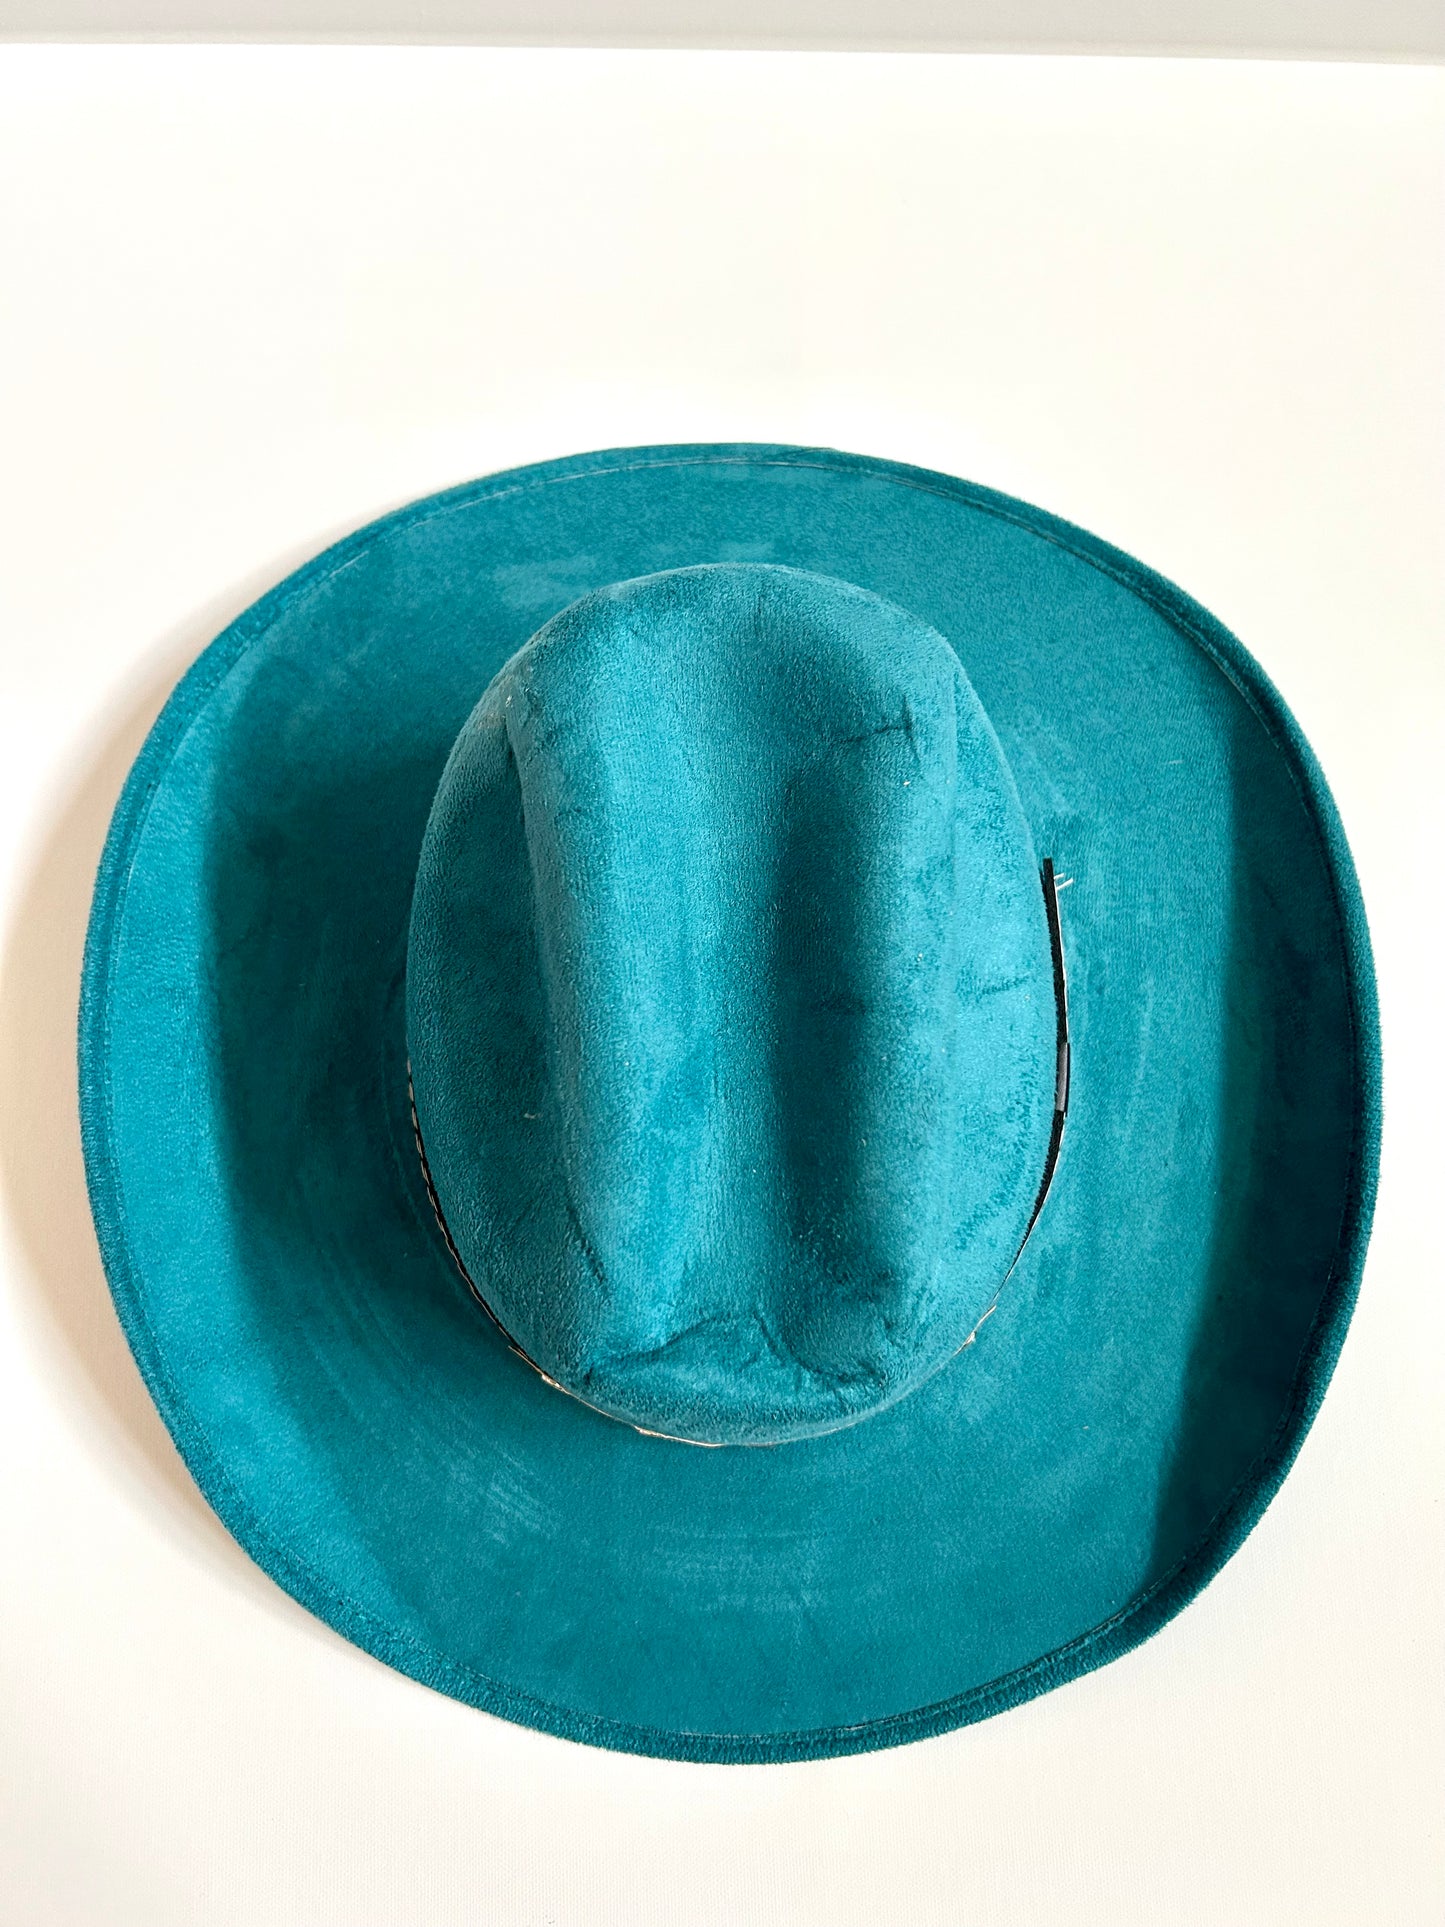 Imperfect Vegan Suede Hat - Austin - Teal Blue